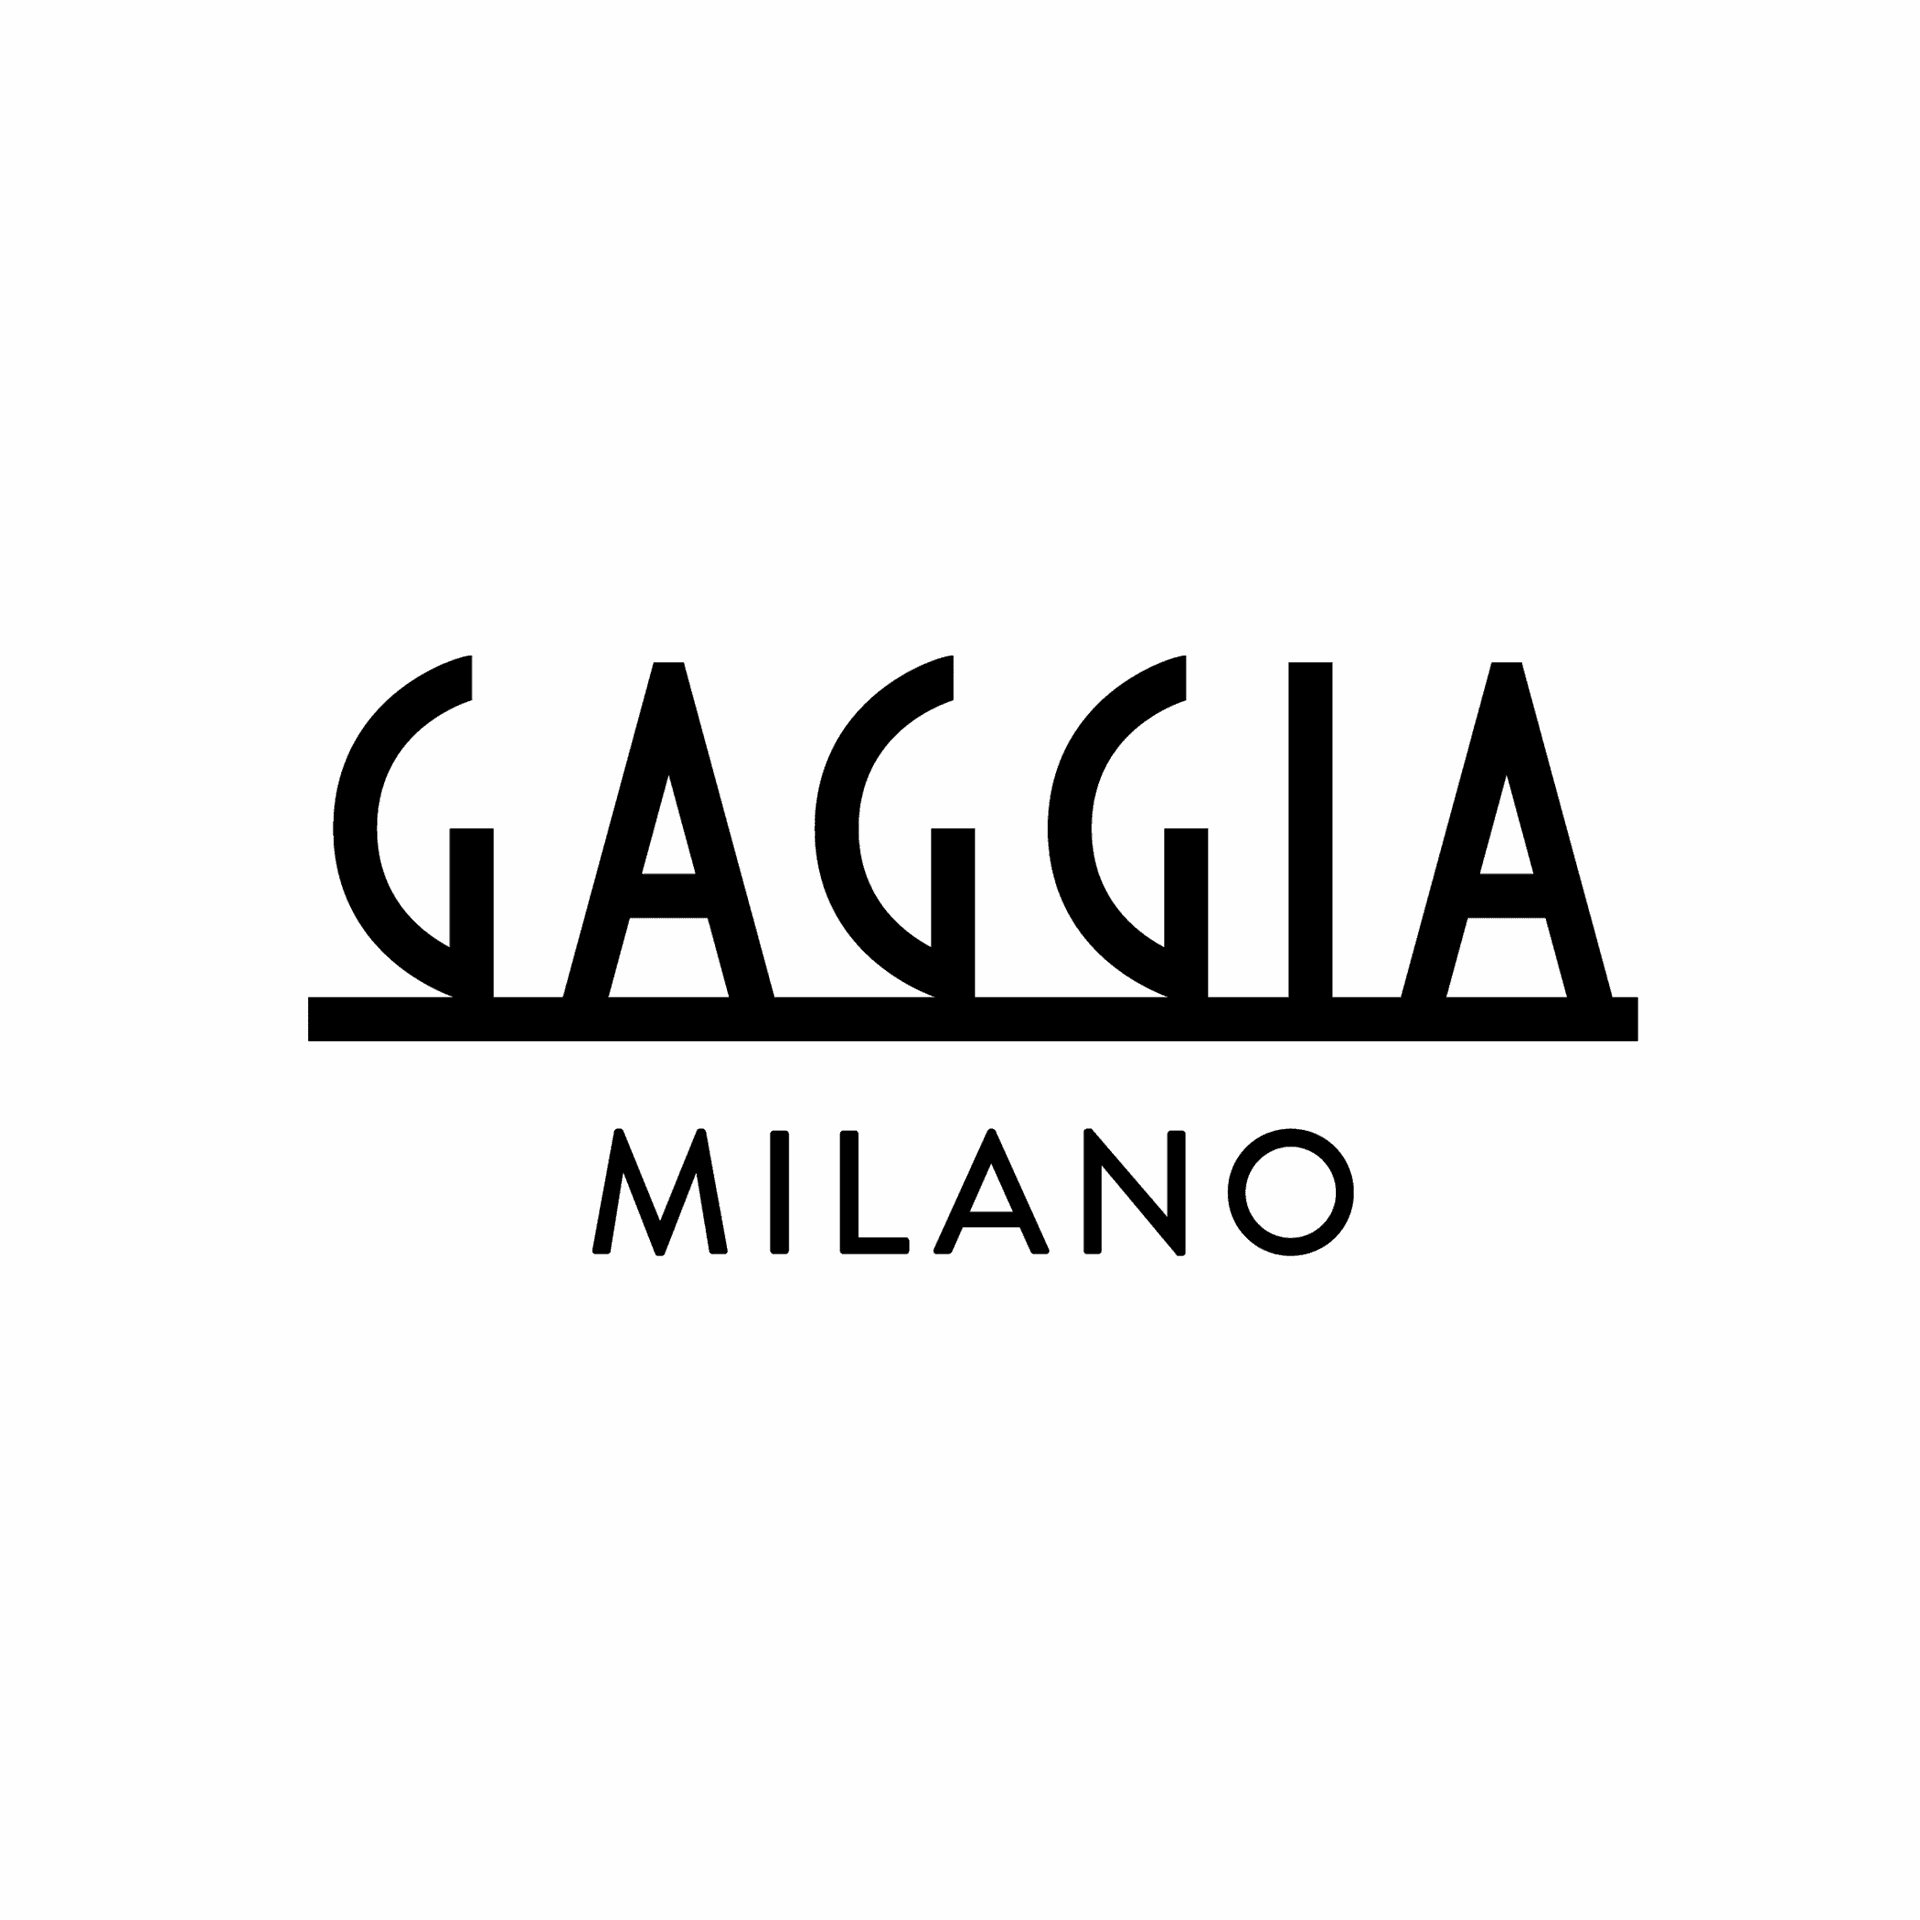 Product Brand: Gaggia